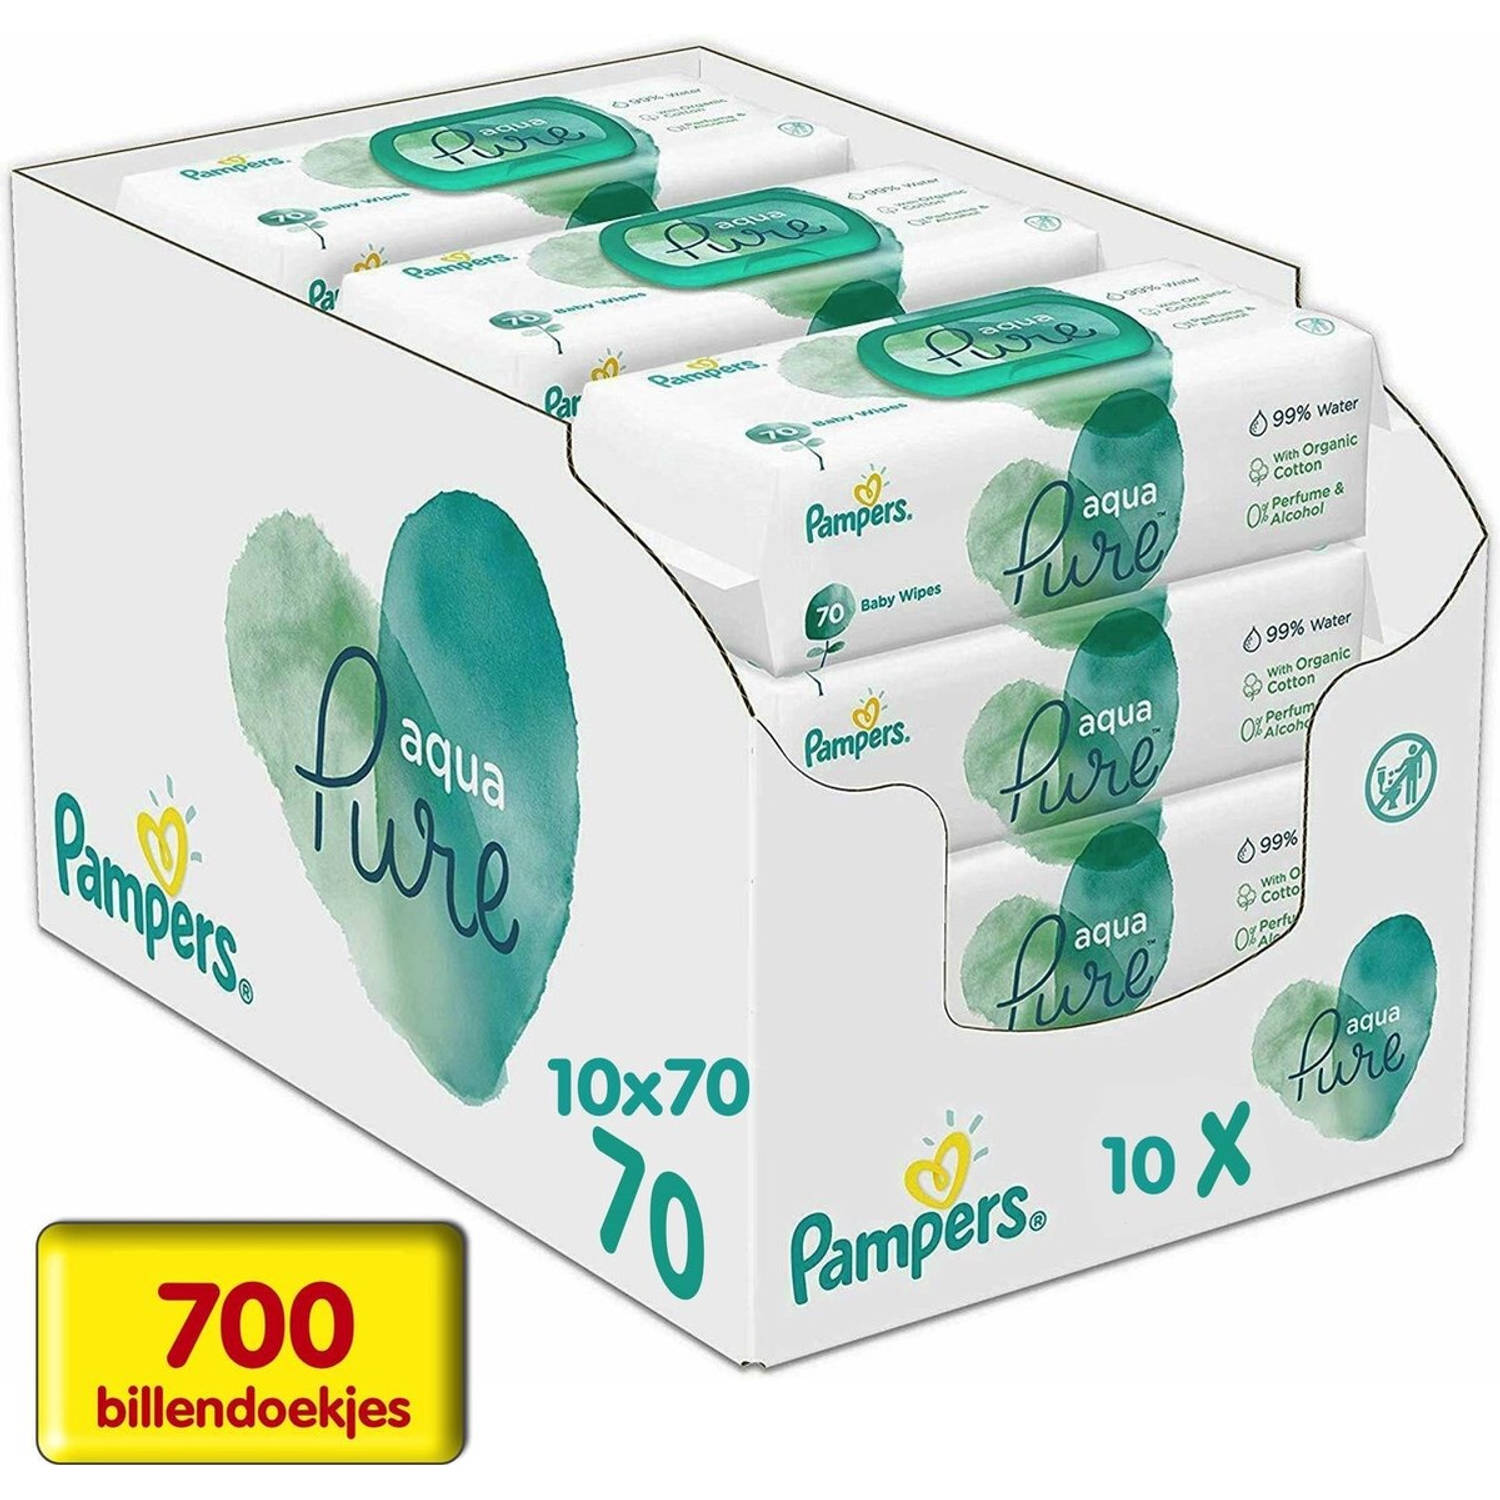 Lol Chemicaliën Beschikbaar Pampers - Aqua Pure - Billendoekjes - 700 doekjes - 10 x 70 | Blokker